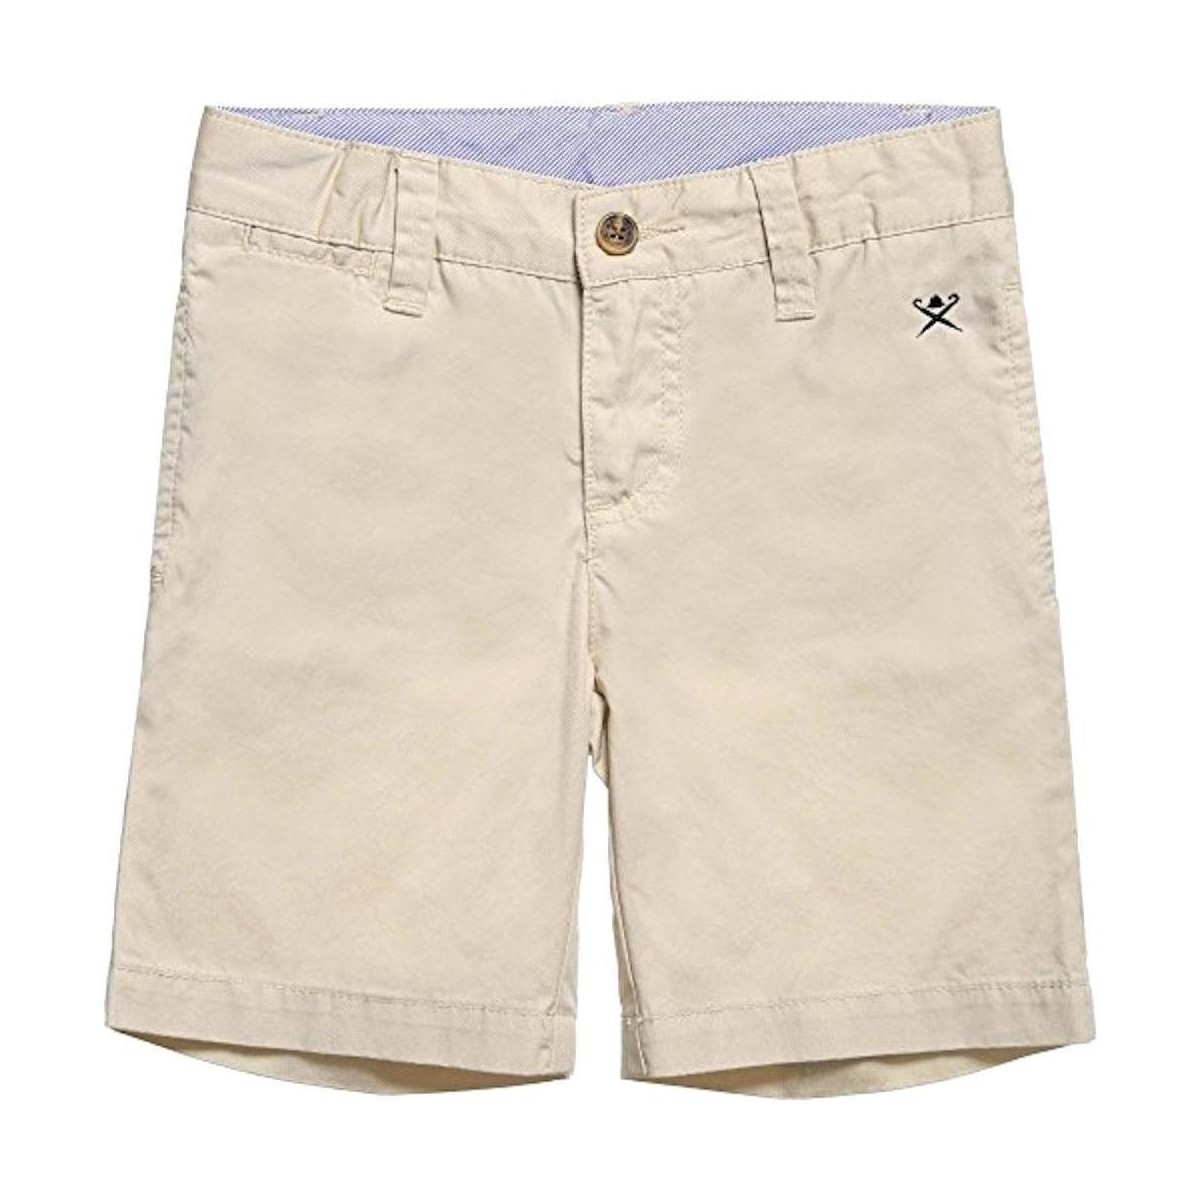 textil Pojkar Shorts / Bermudas Hackett  Beige